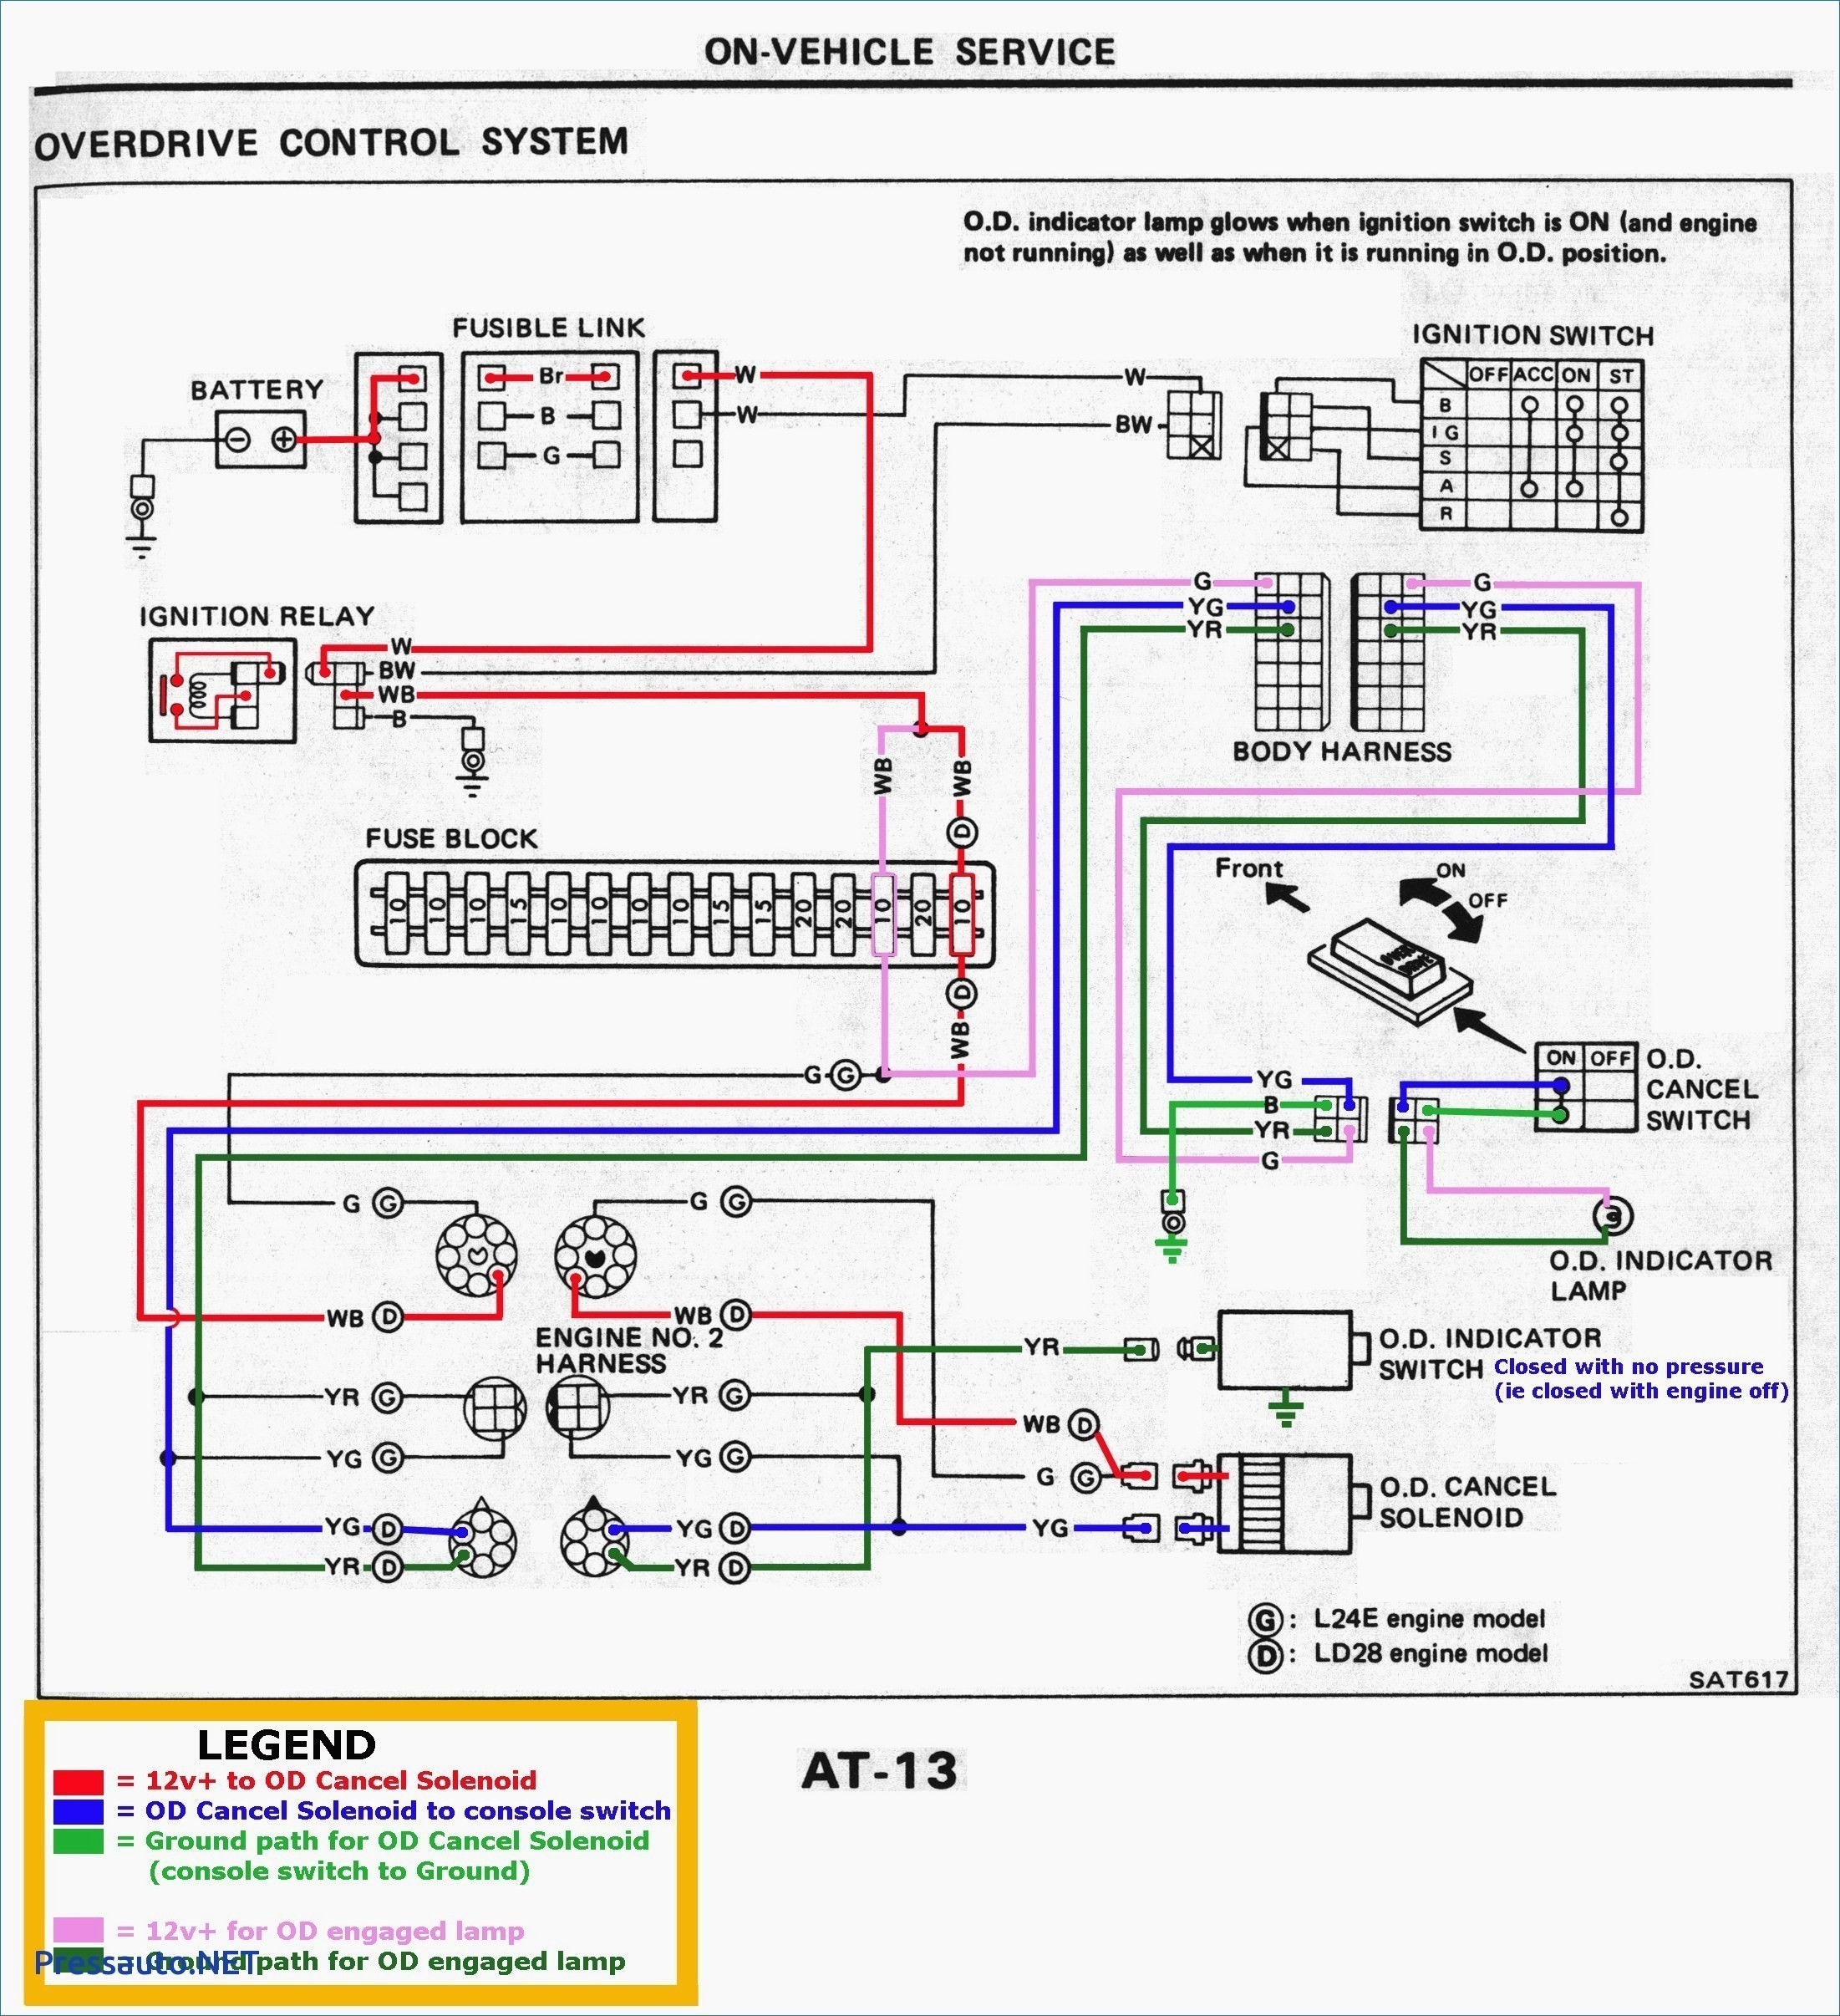 Generac Gp5000 Parts Diagram Generac Generator Wiring Detailed Schematic Diagrams Of Generac Gp5000 Parts Diagram